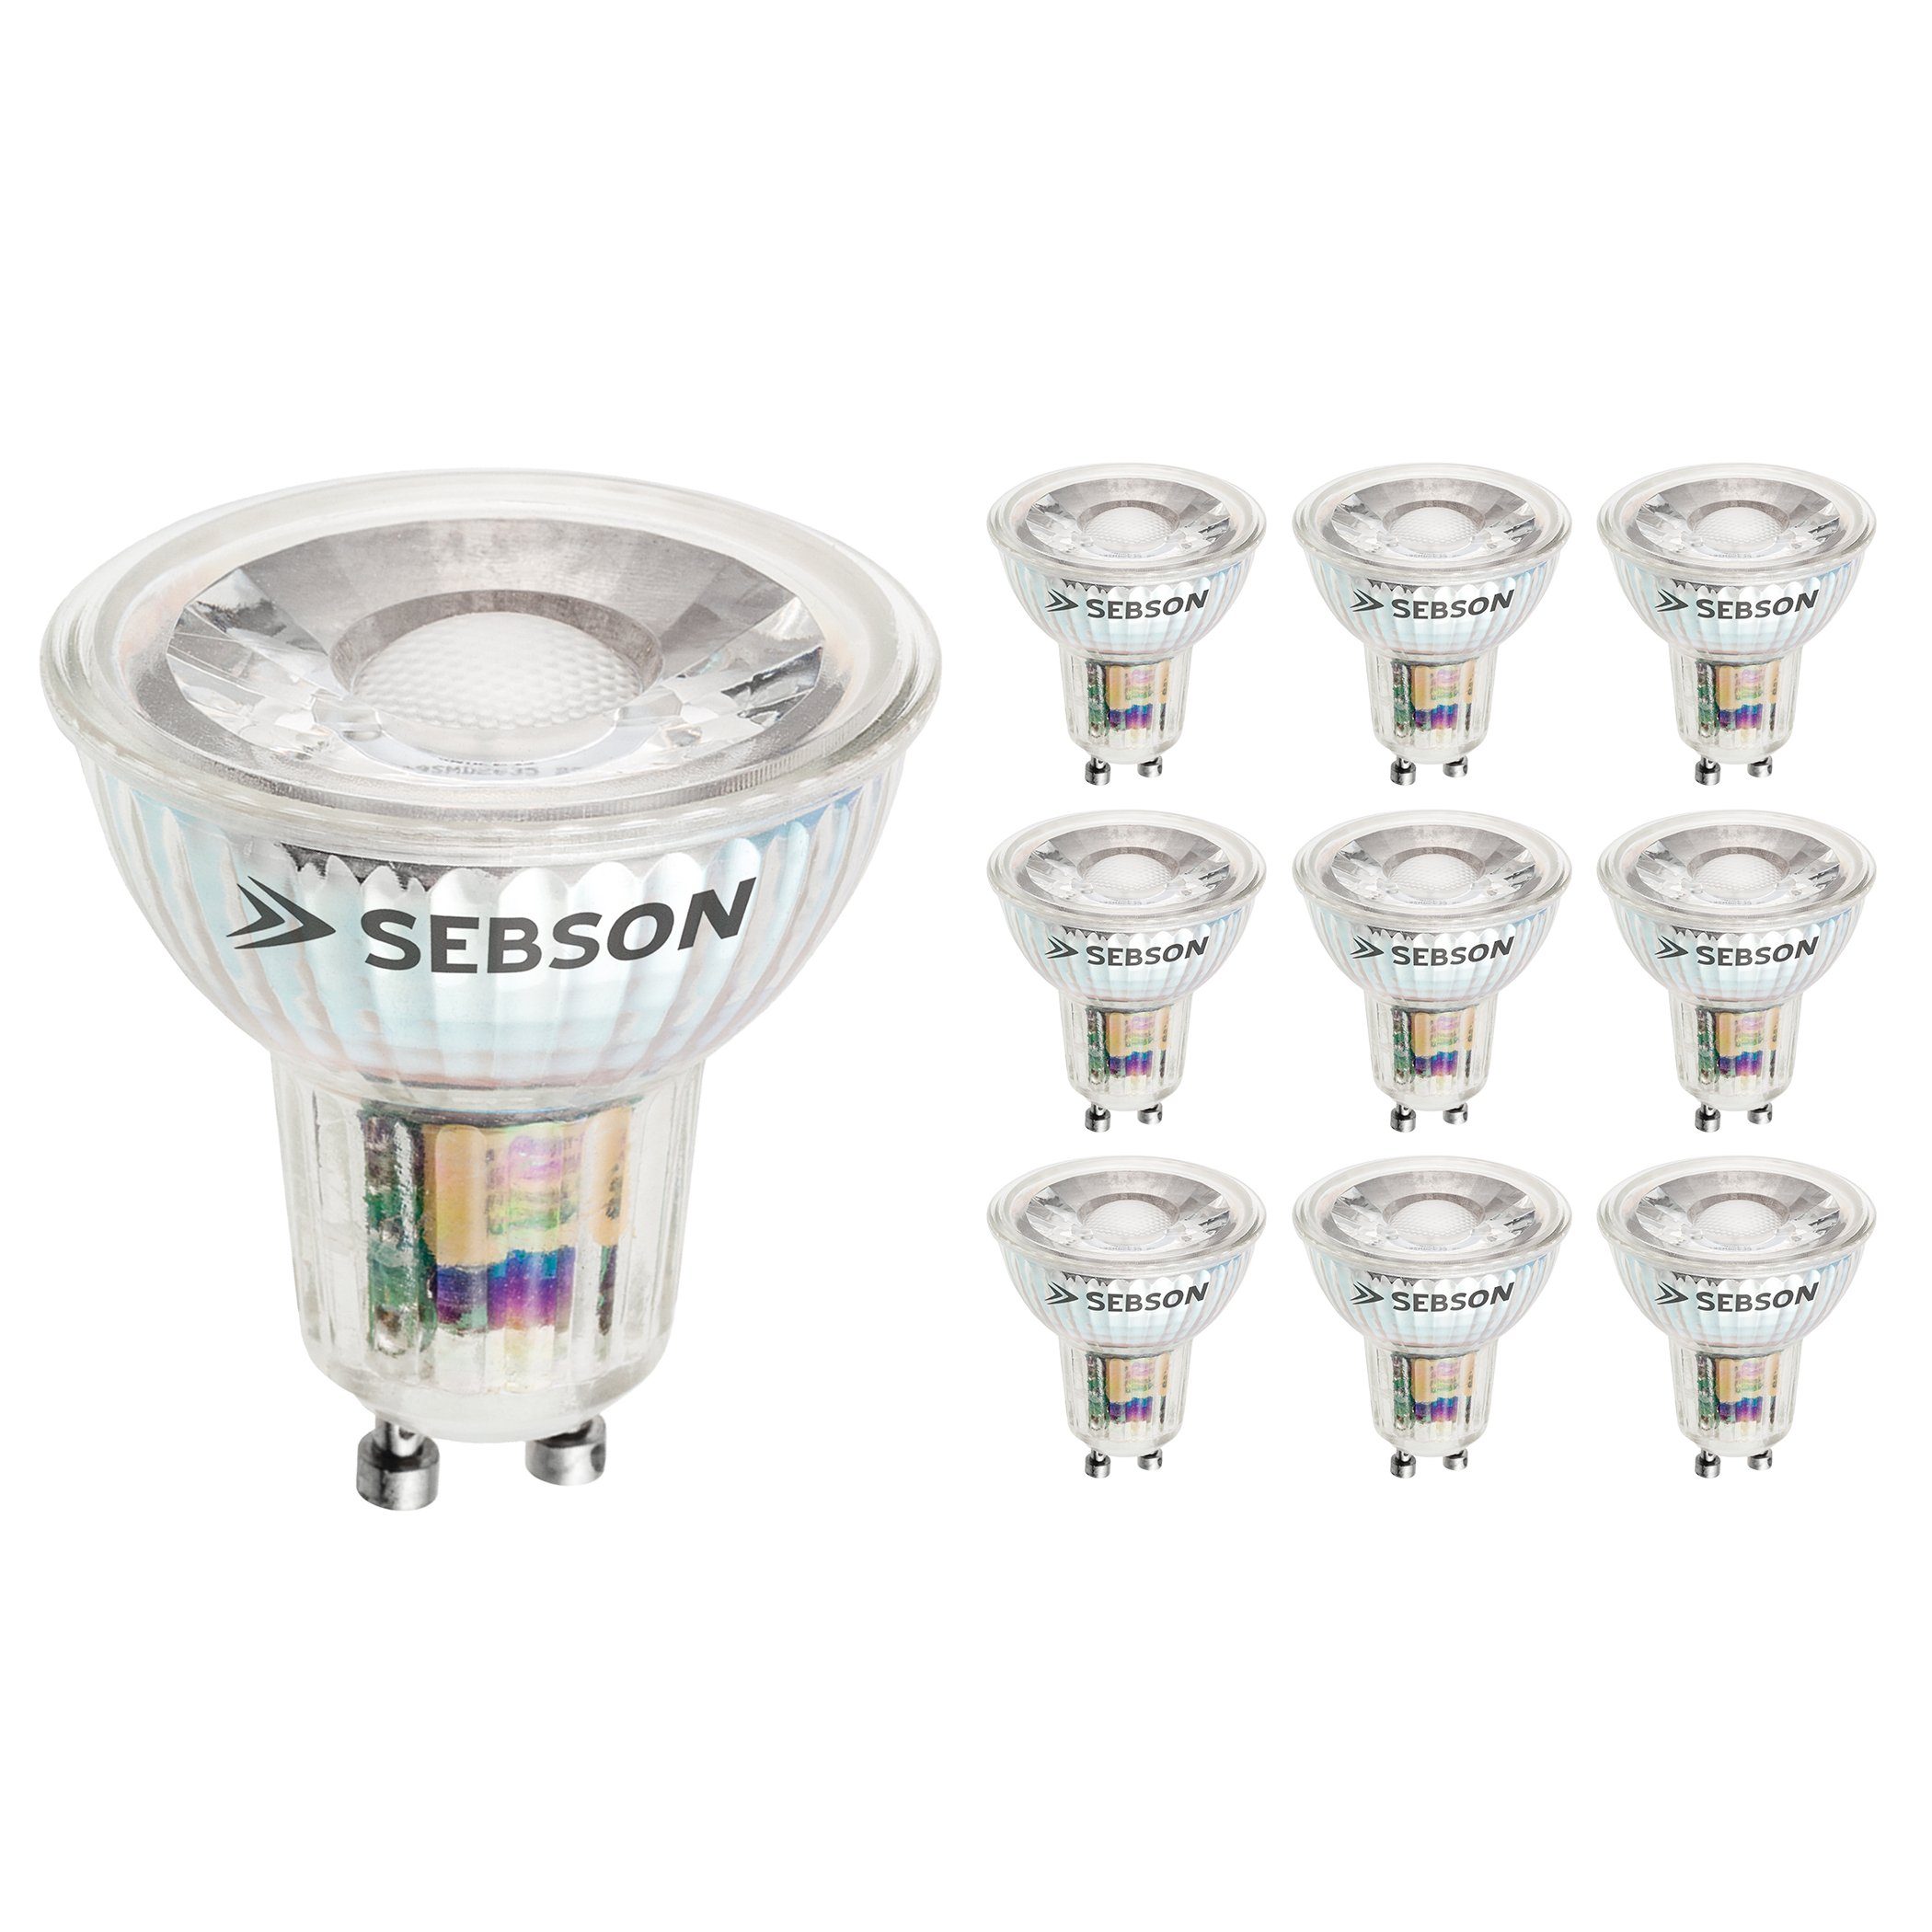 SEBSON »Ra 95 Serie + flimmerfrei, GU10 LED Lampe 5W warmweiß 380lm, 3000K,  230V LED Leuchtmittel, ø50x54mm, 10er Pack« LED-Leuchtmittel